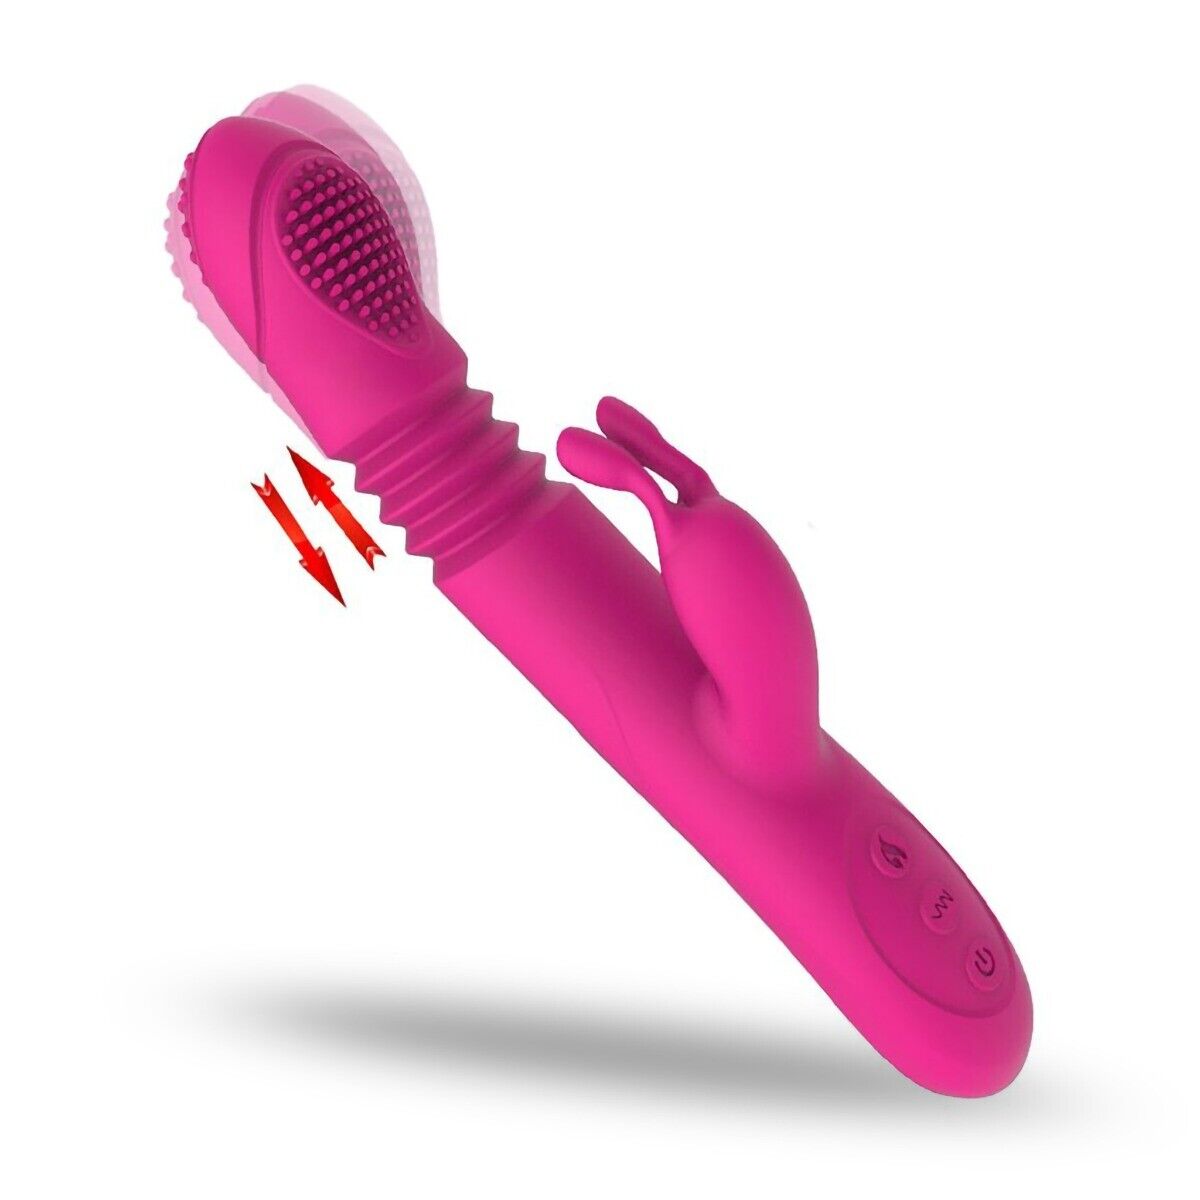 Slim Rechargeable Thrusting Rabbit Vibrator Dildo Sex-toys for Women Couples